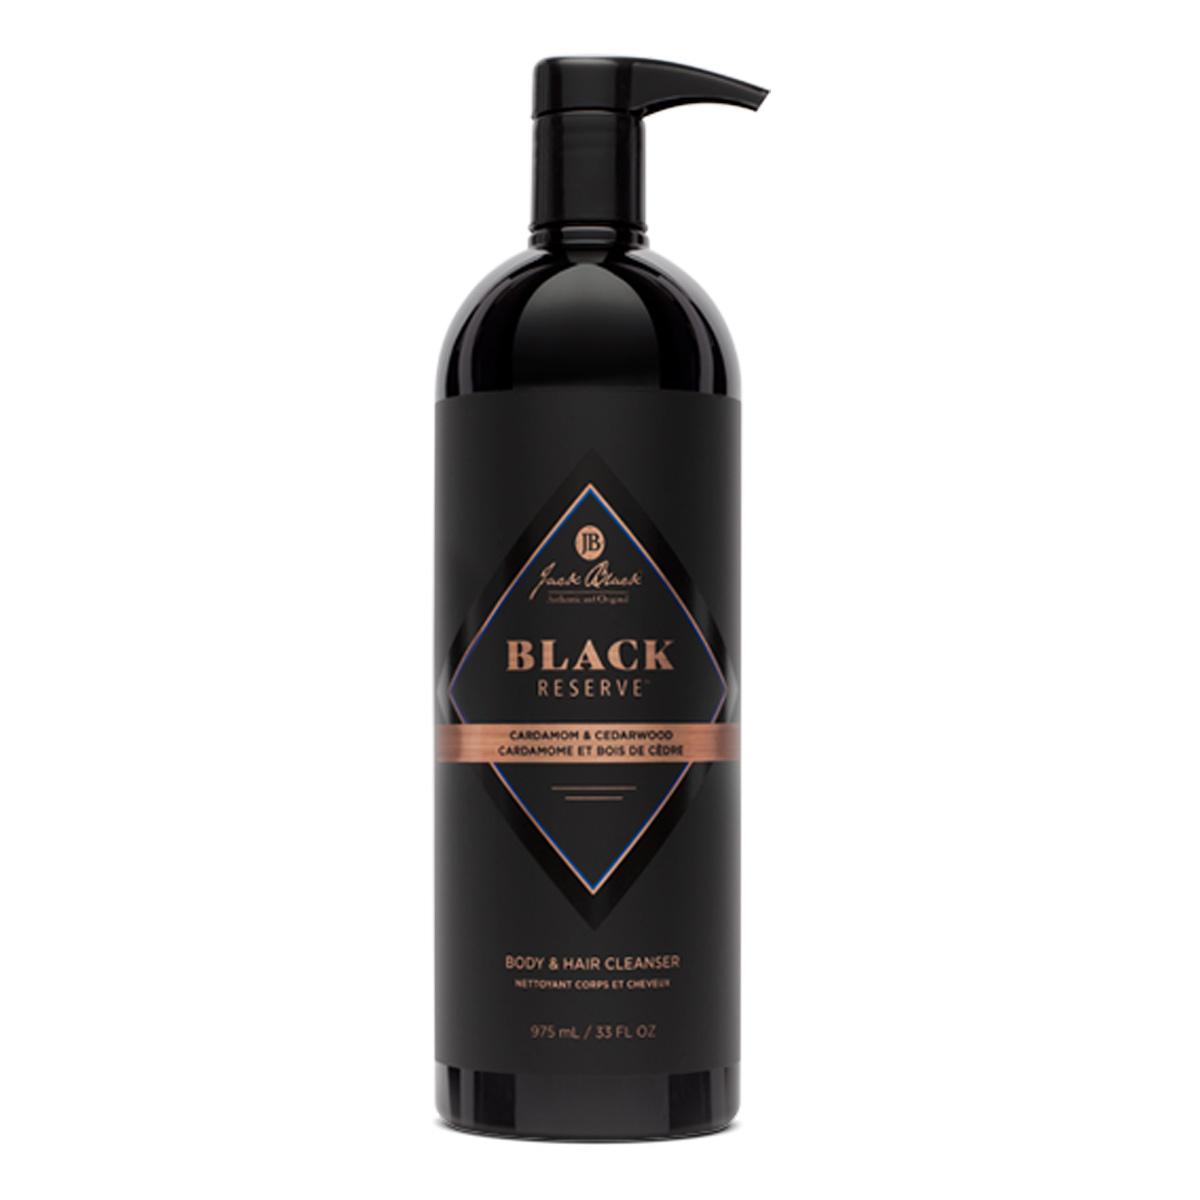 Primary image of Black Reserve Body Wash + Hair Cleanser - Cardamom + Cedarwood 